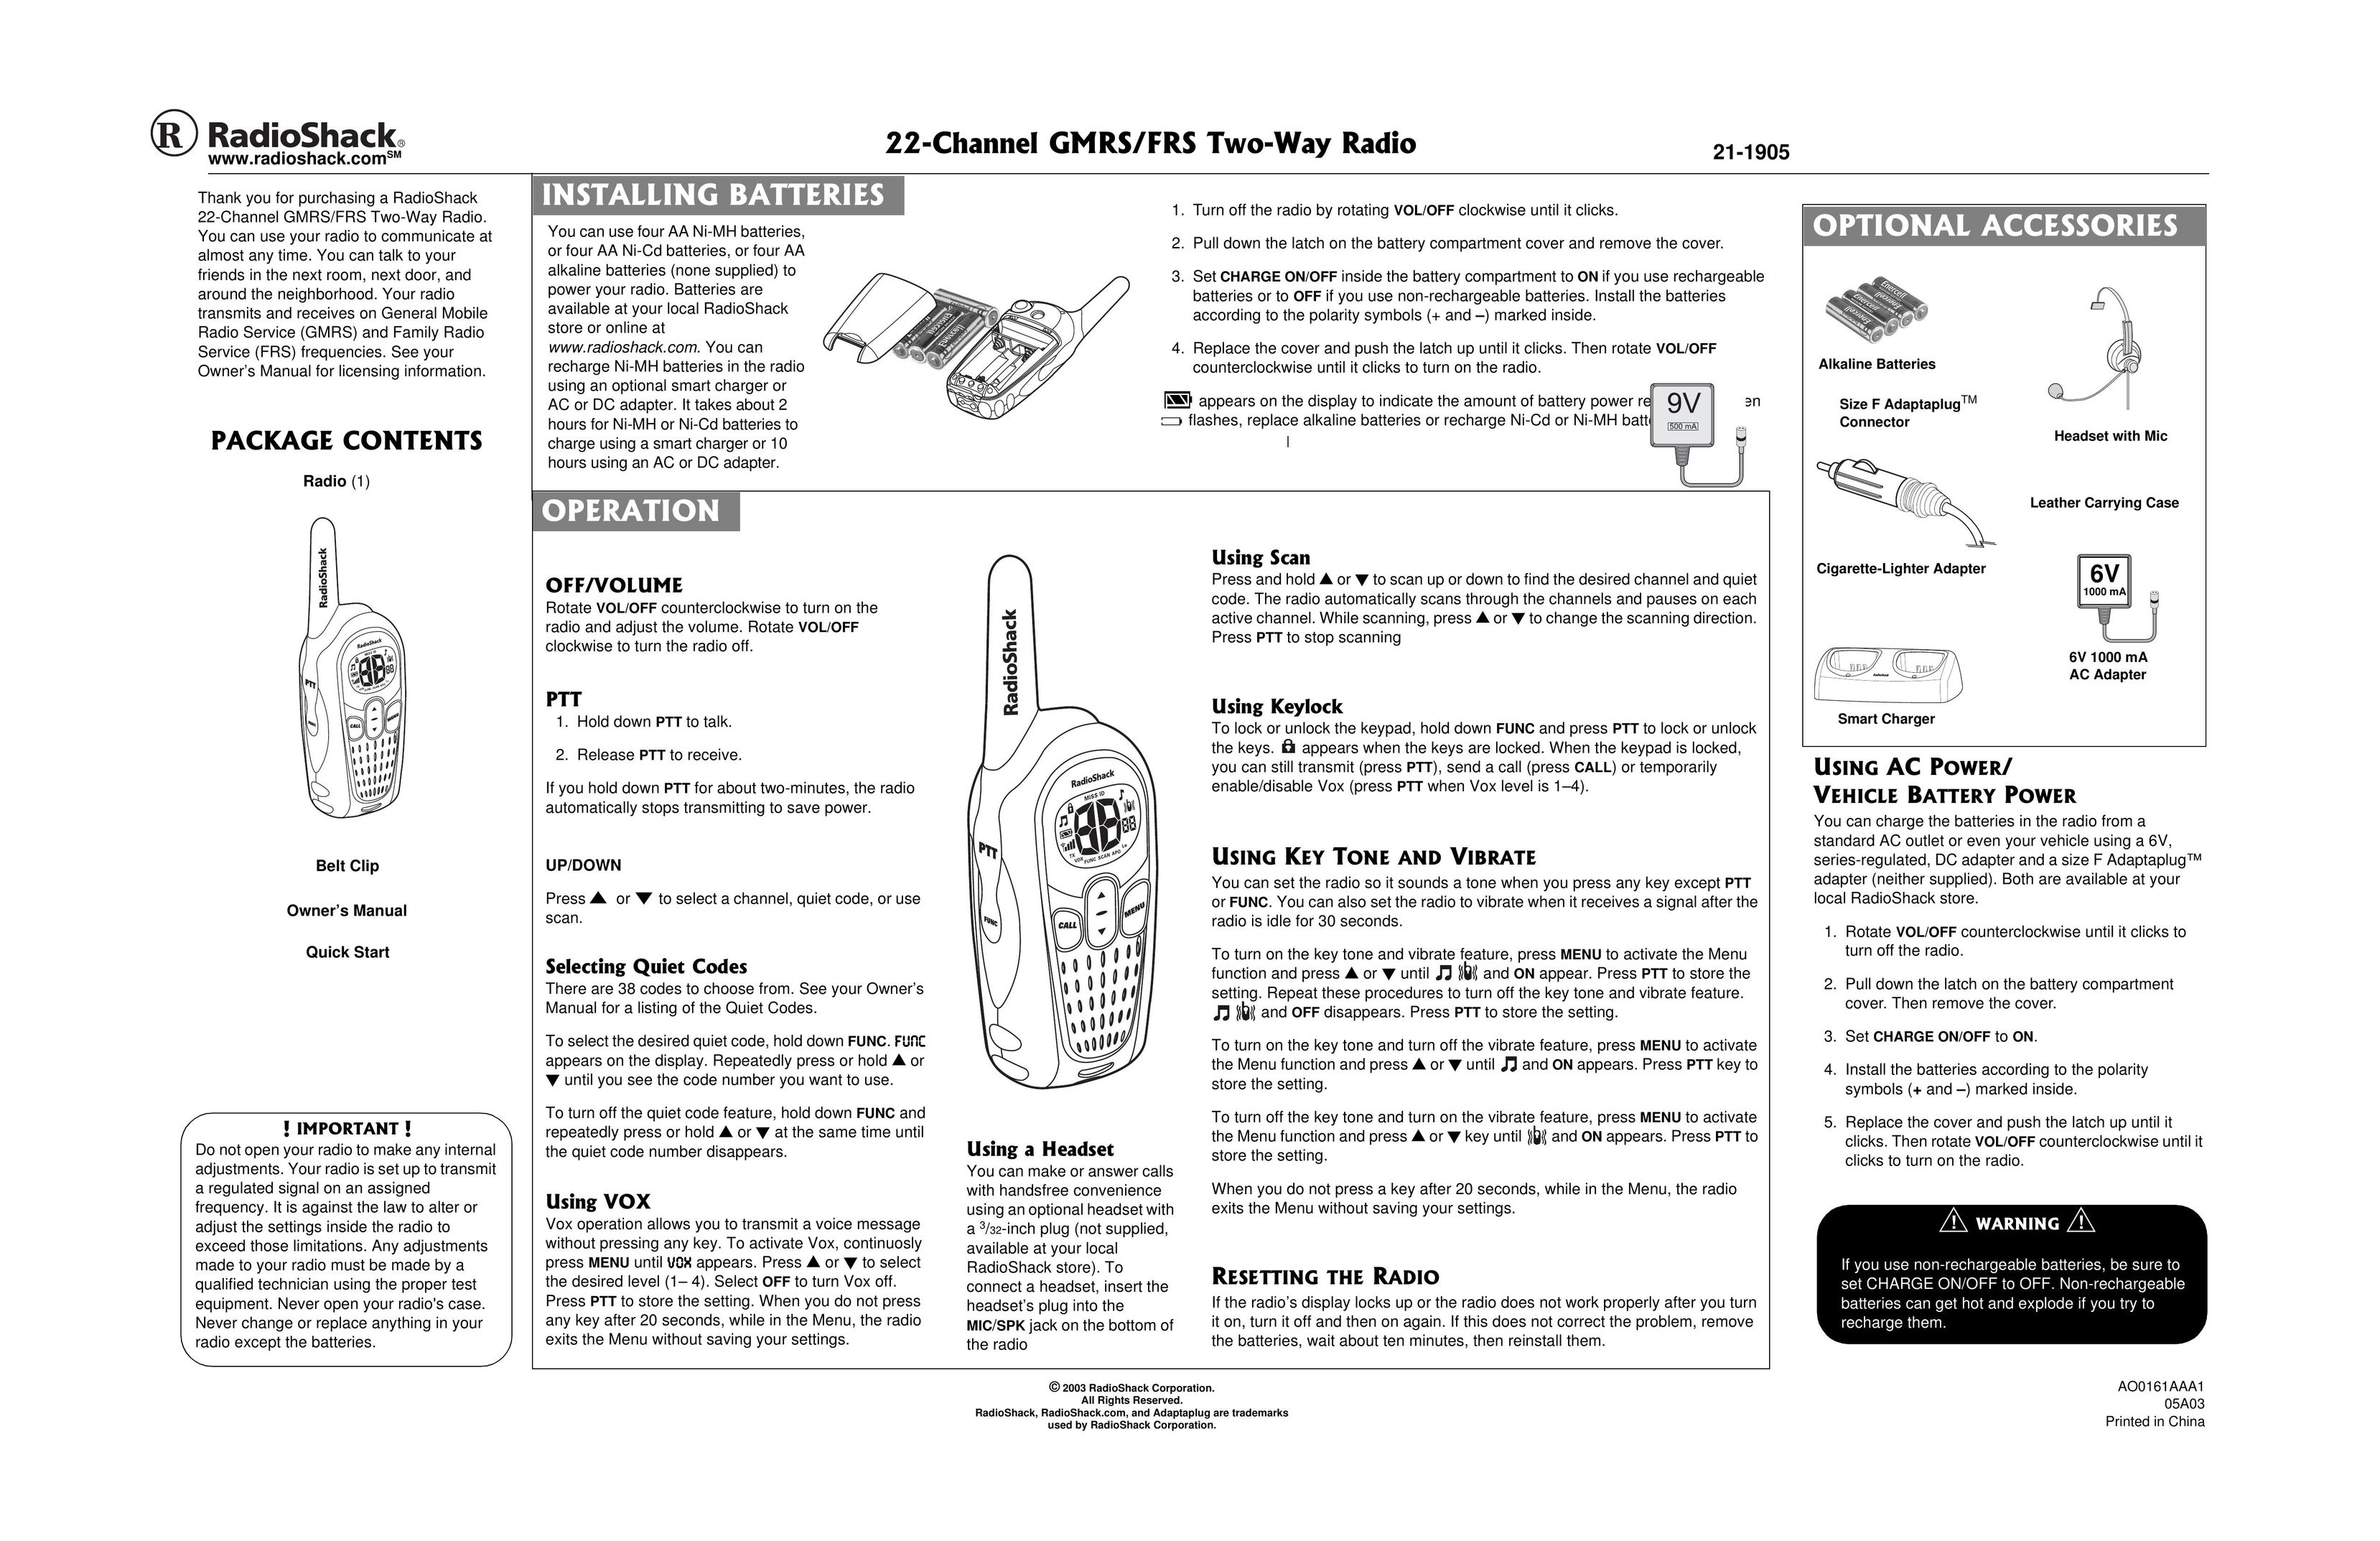 Radio Shack 21-1905 Two-Way Radio User Manual